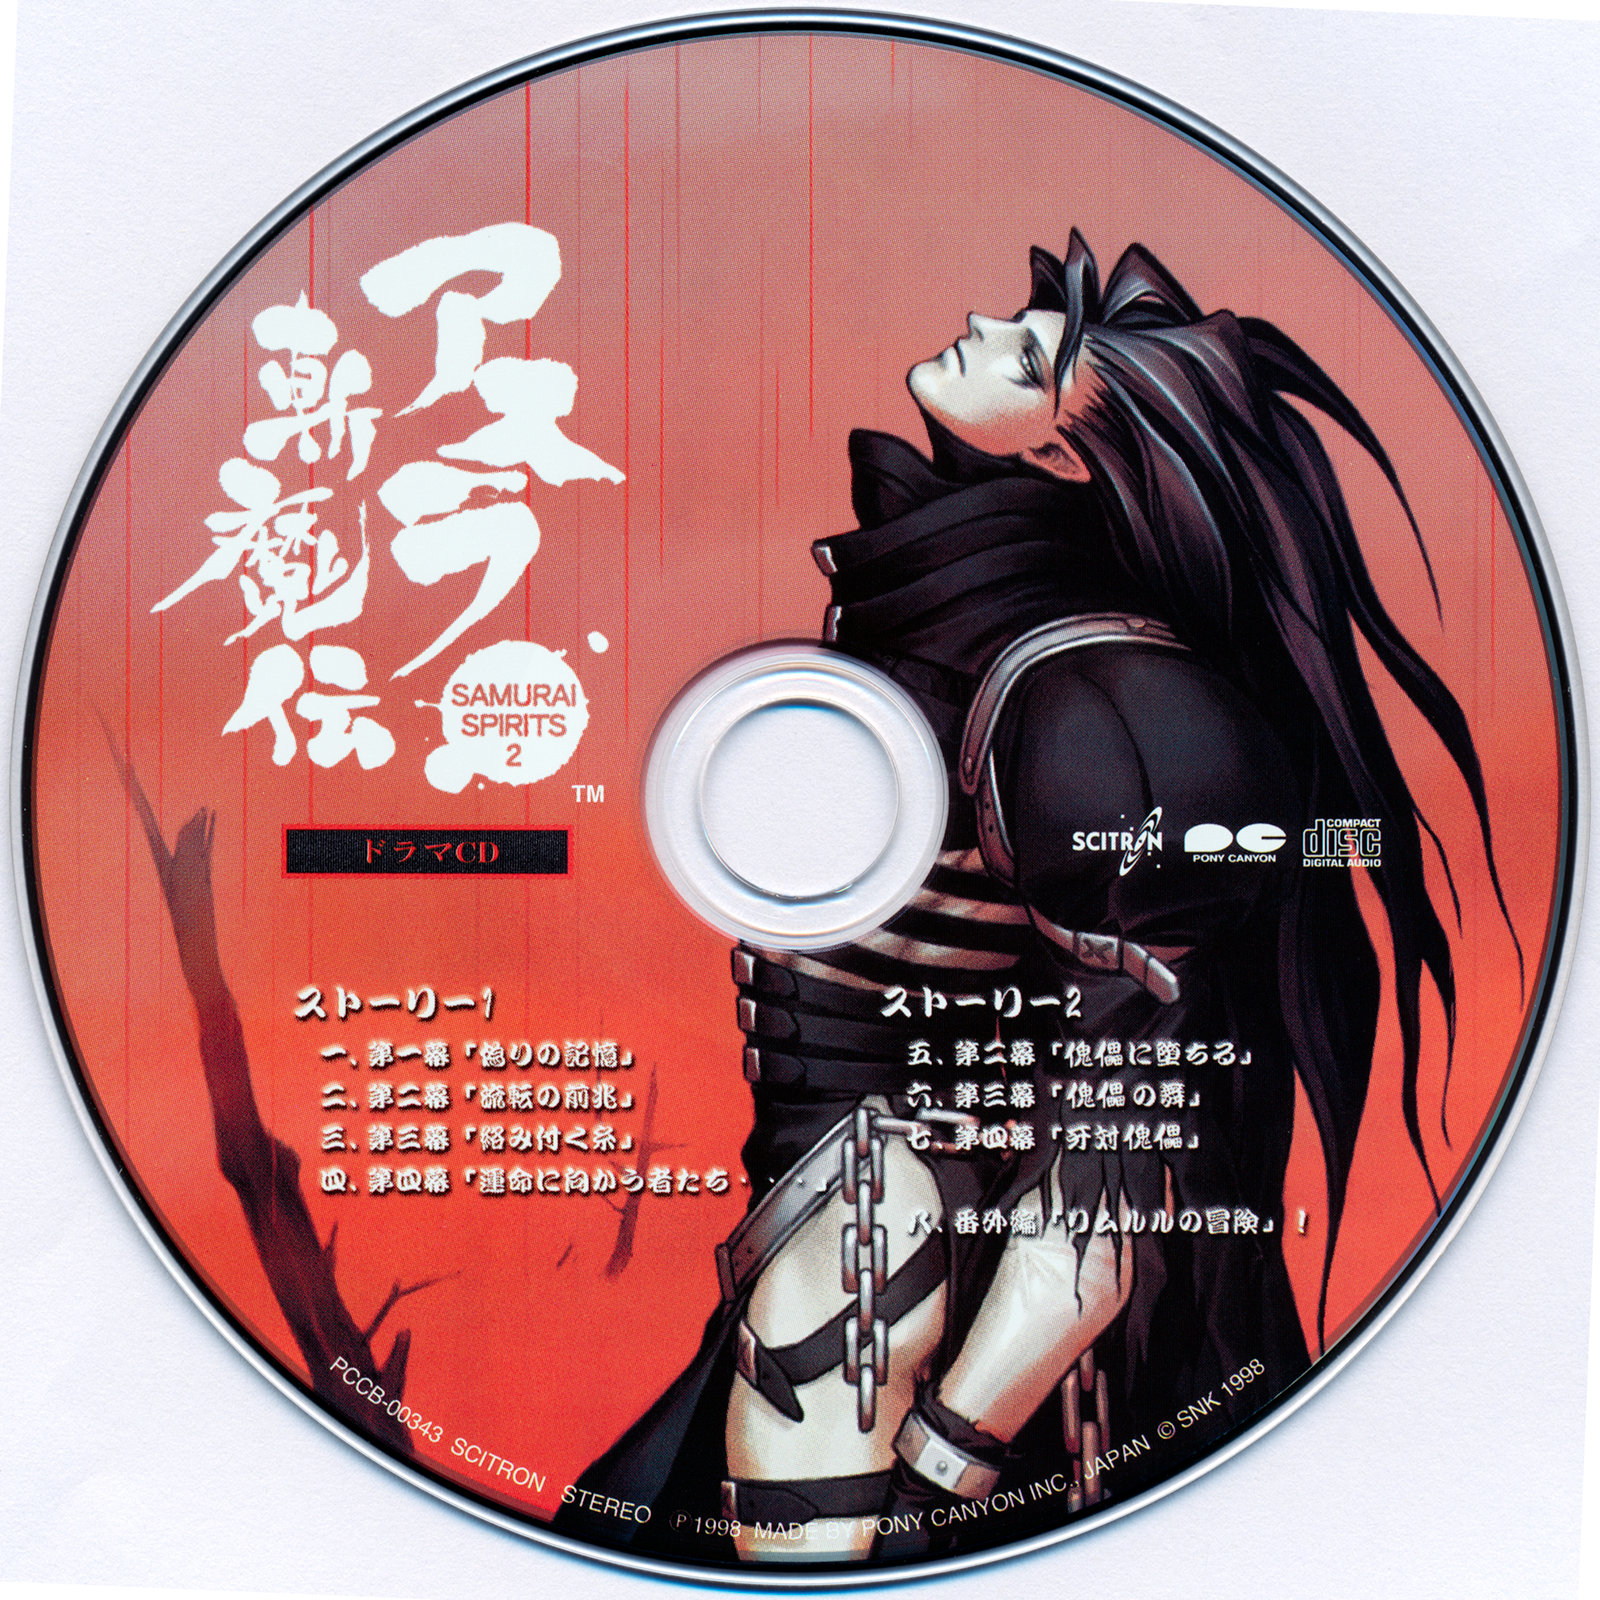 SAMURAI SHODOWN: The Legend of Samurai open beta is available now